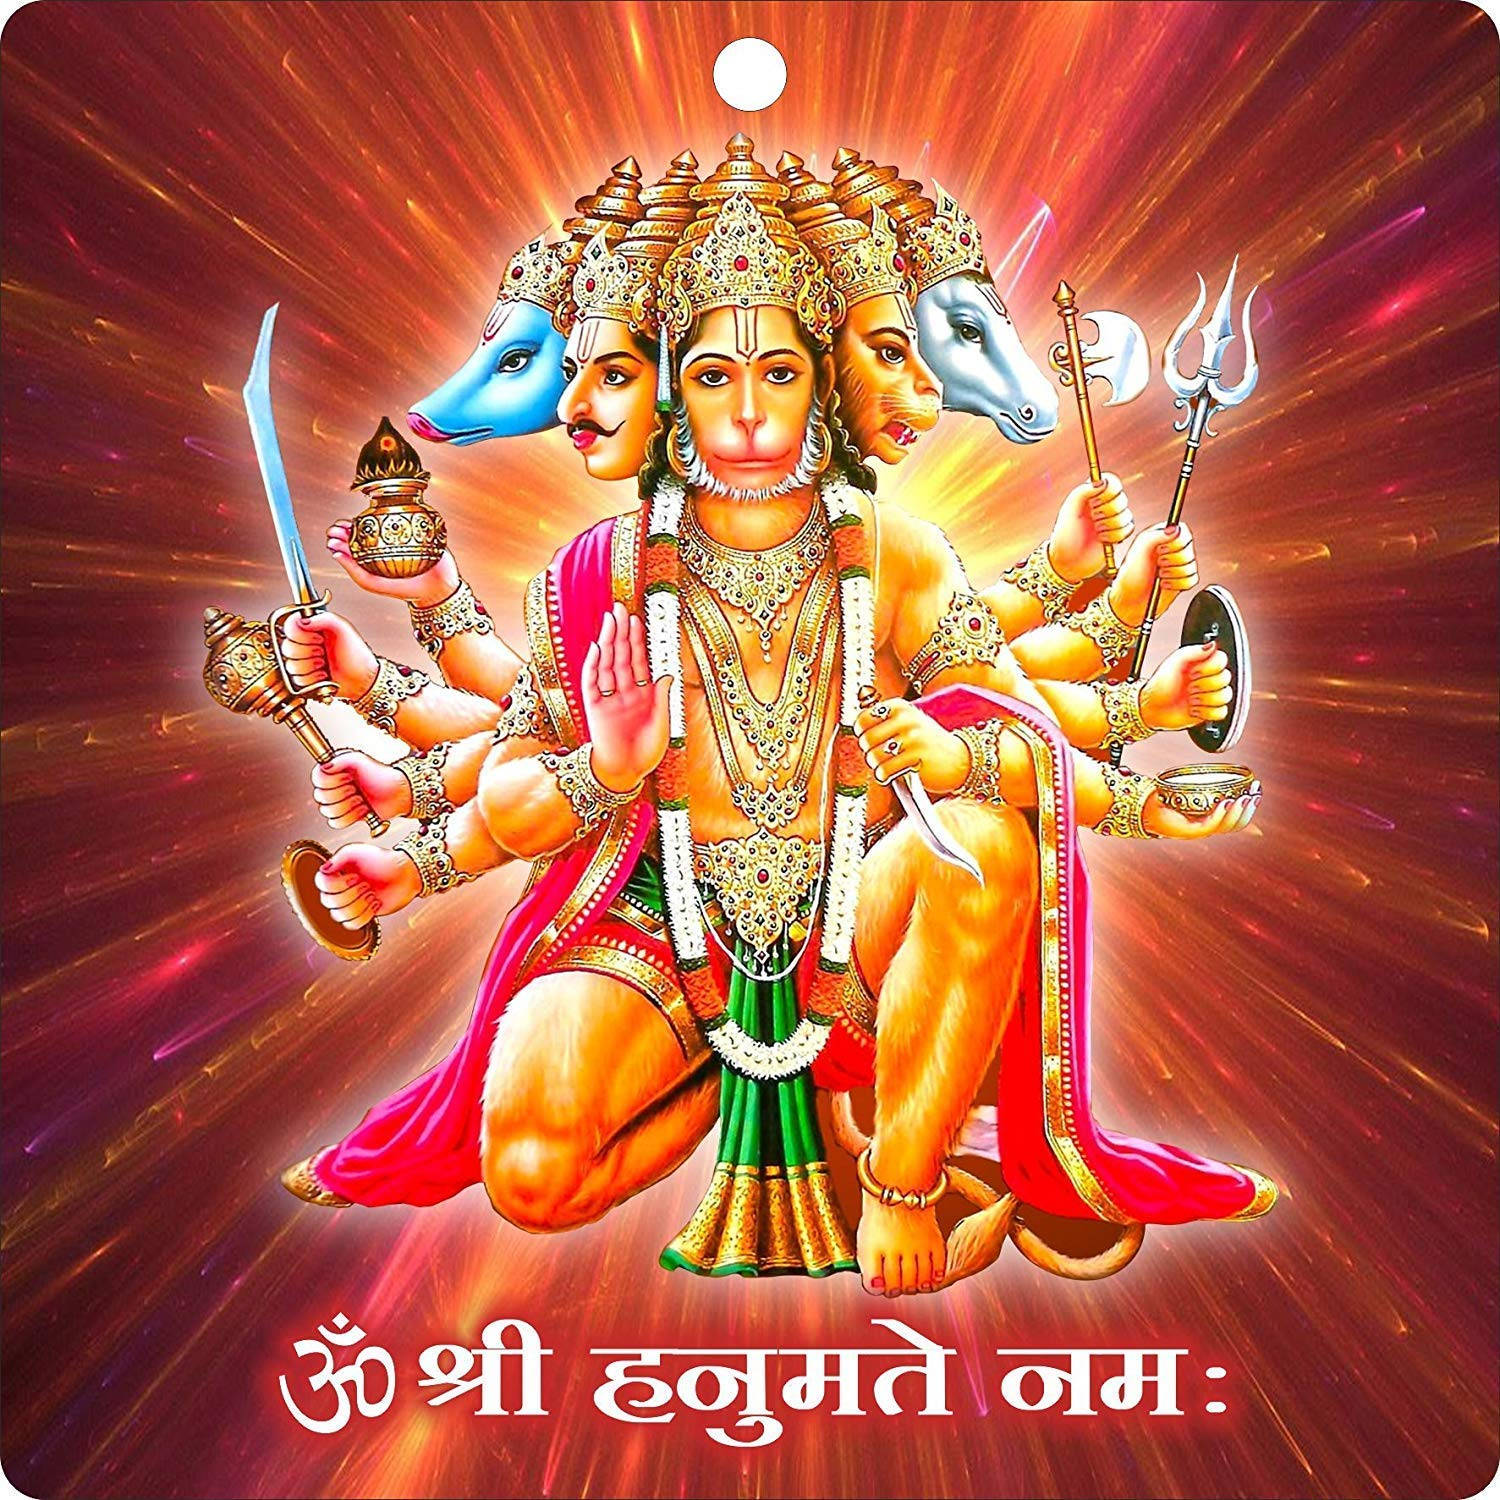 Panchmukhi Hanuman Med Lyse Lys Wallpaper